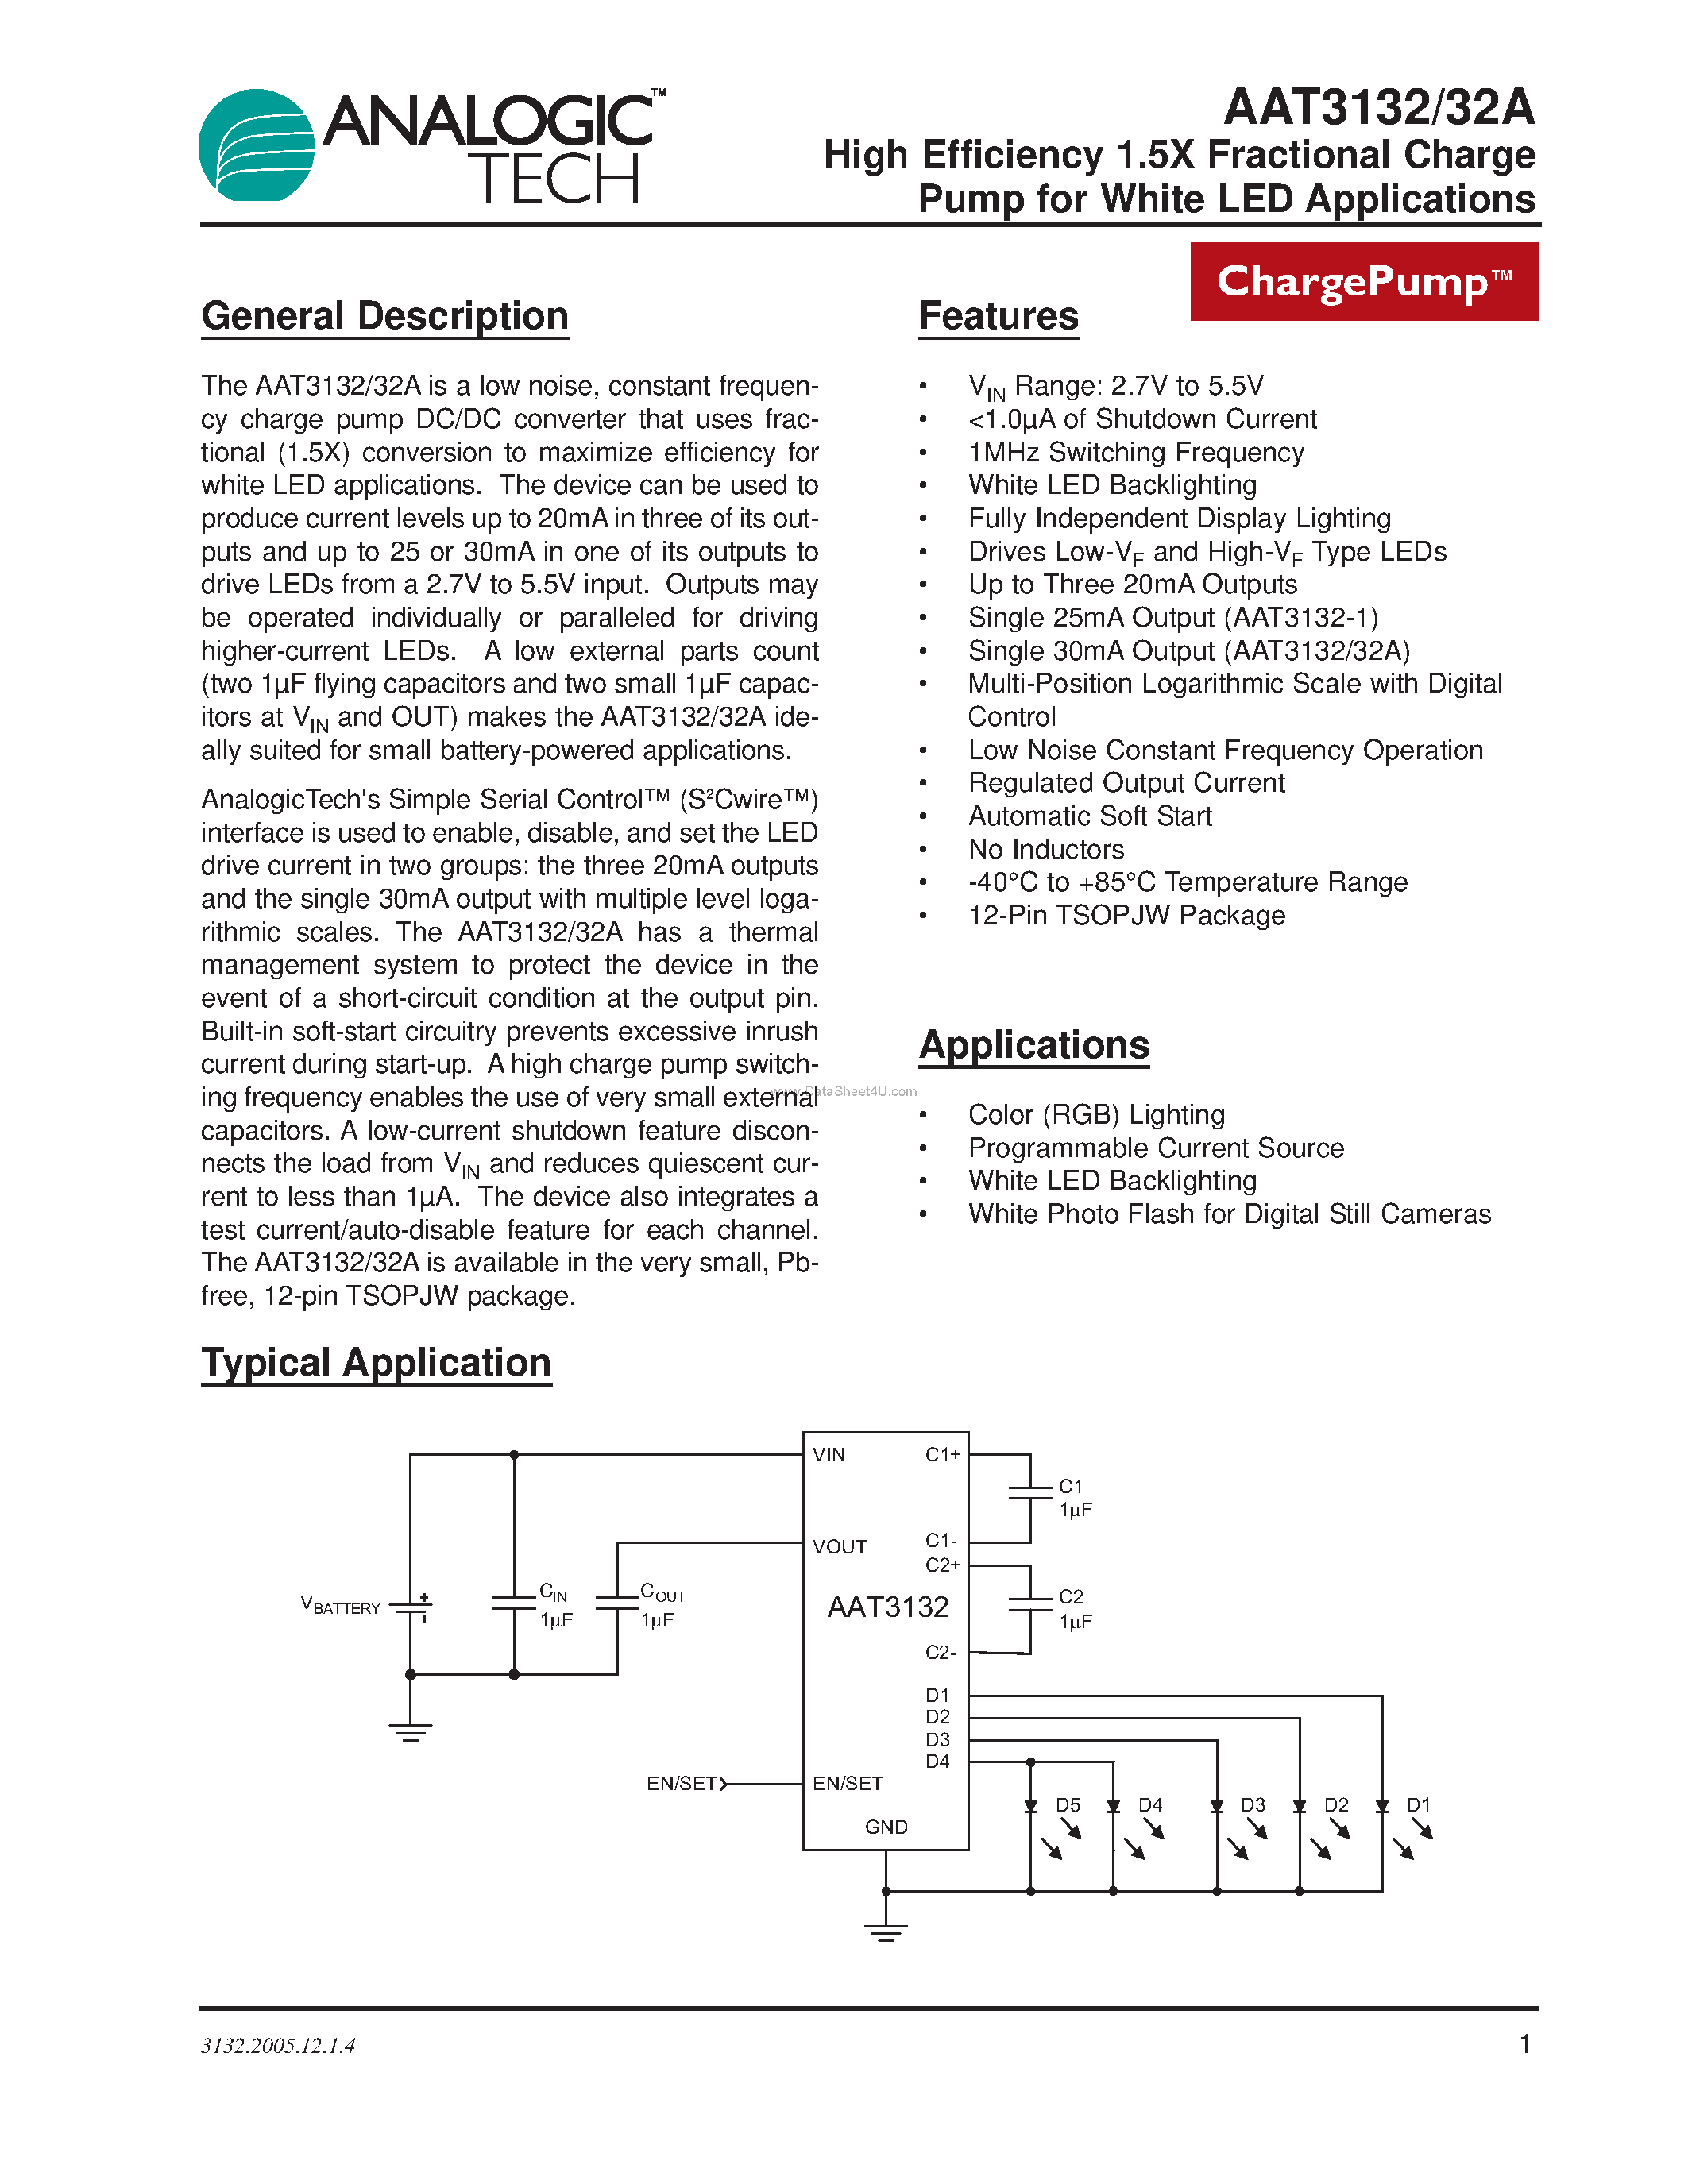 Даташит AAT3132 - High Efficiency 1.5X Fractional Charge Pump страница 1